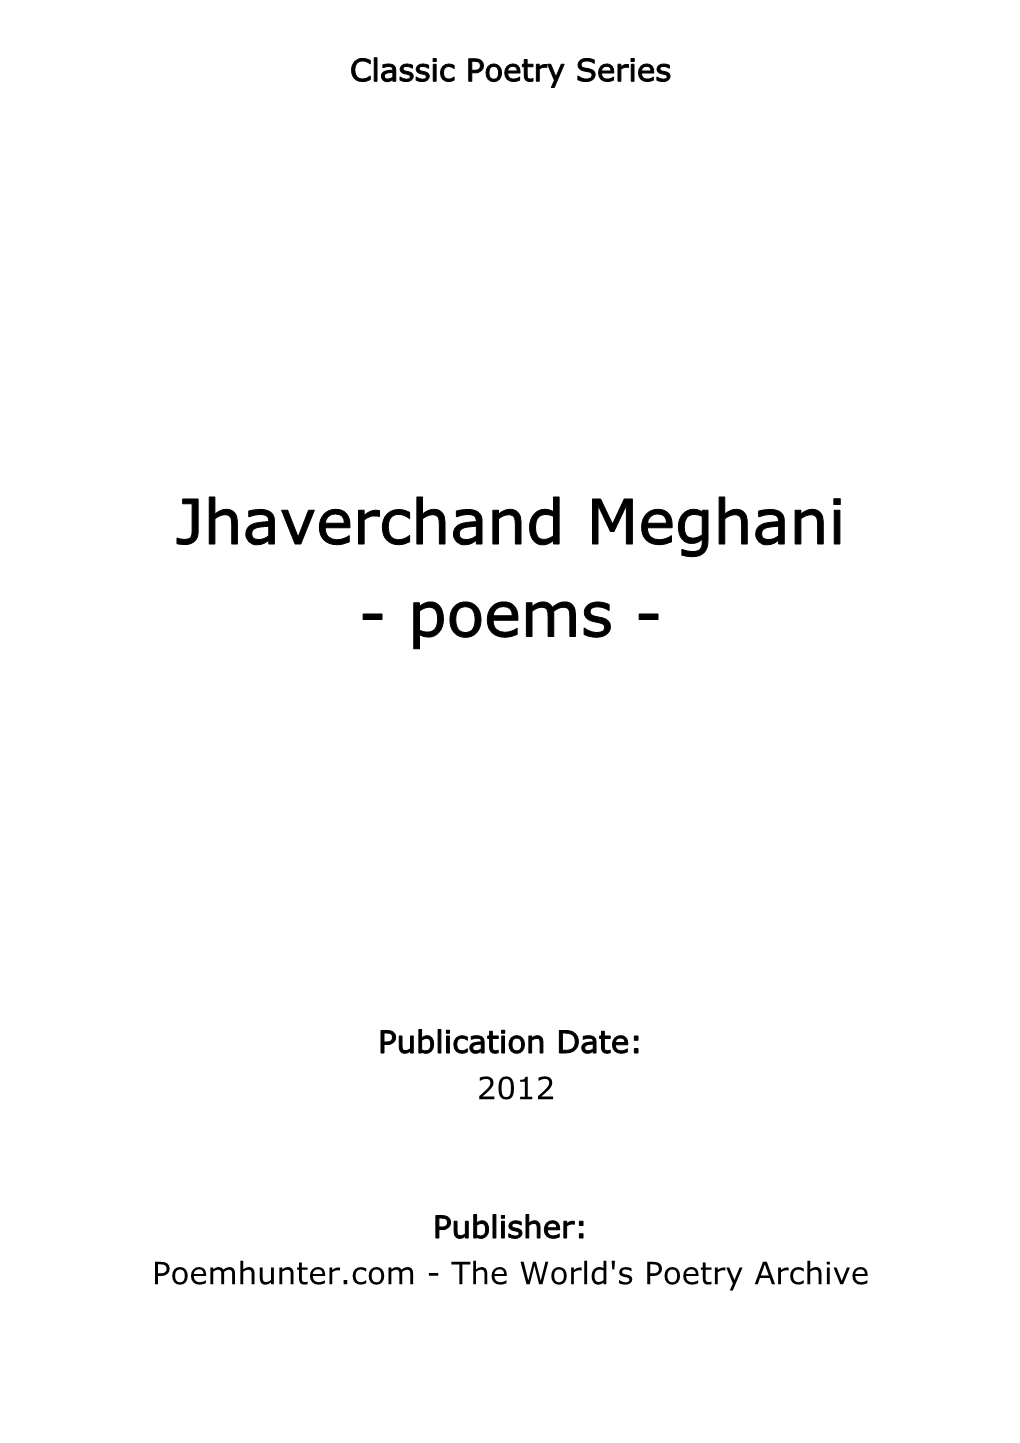 Jhaverchand Meghani - Poems